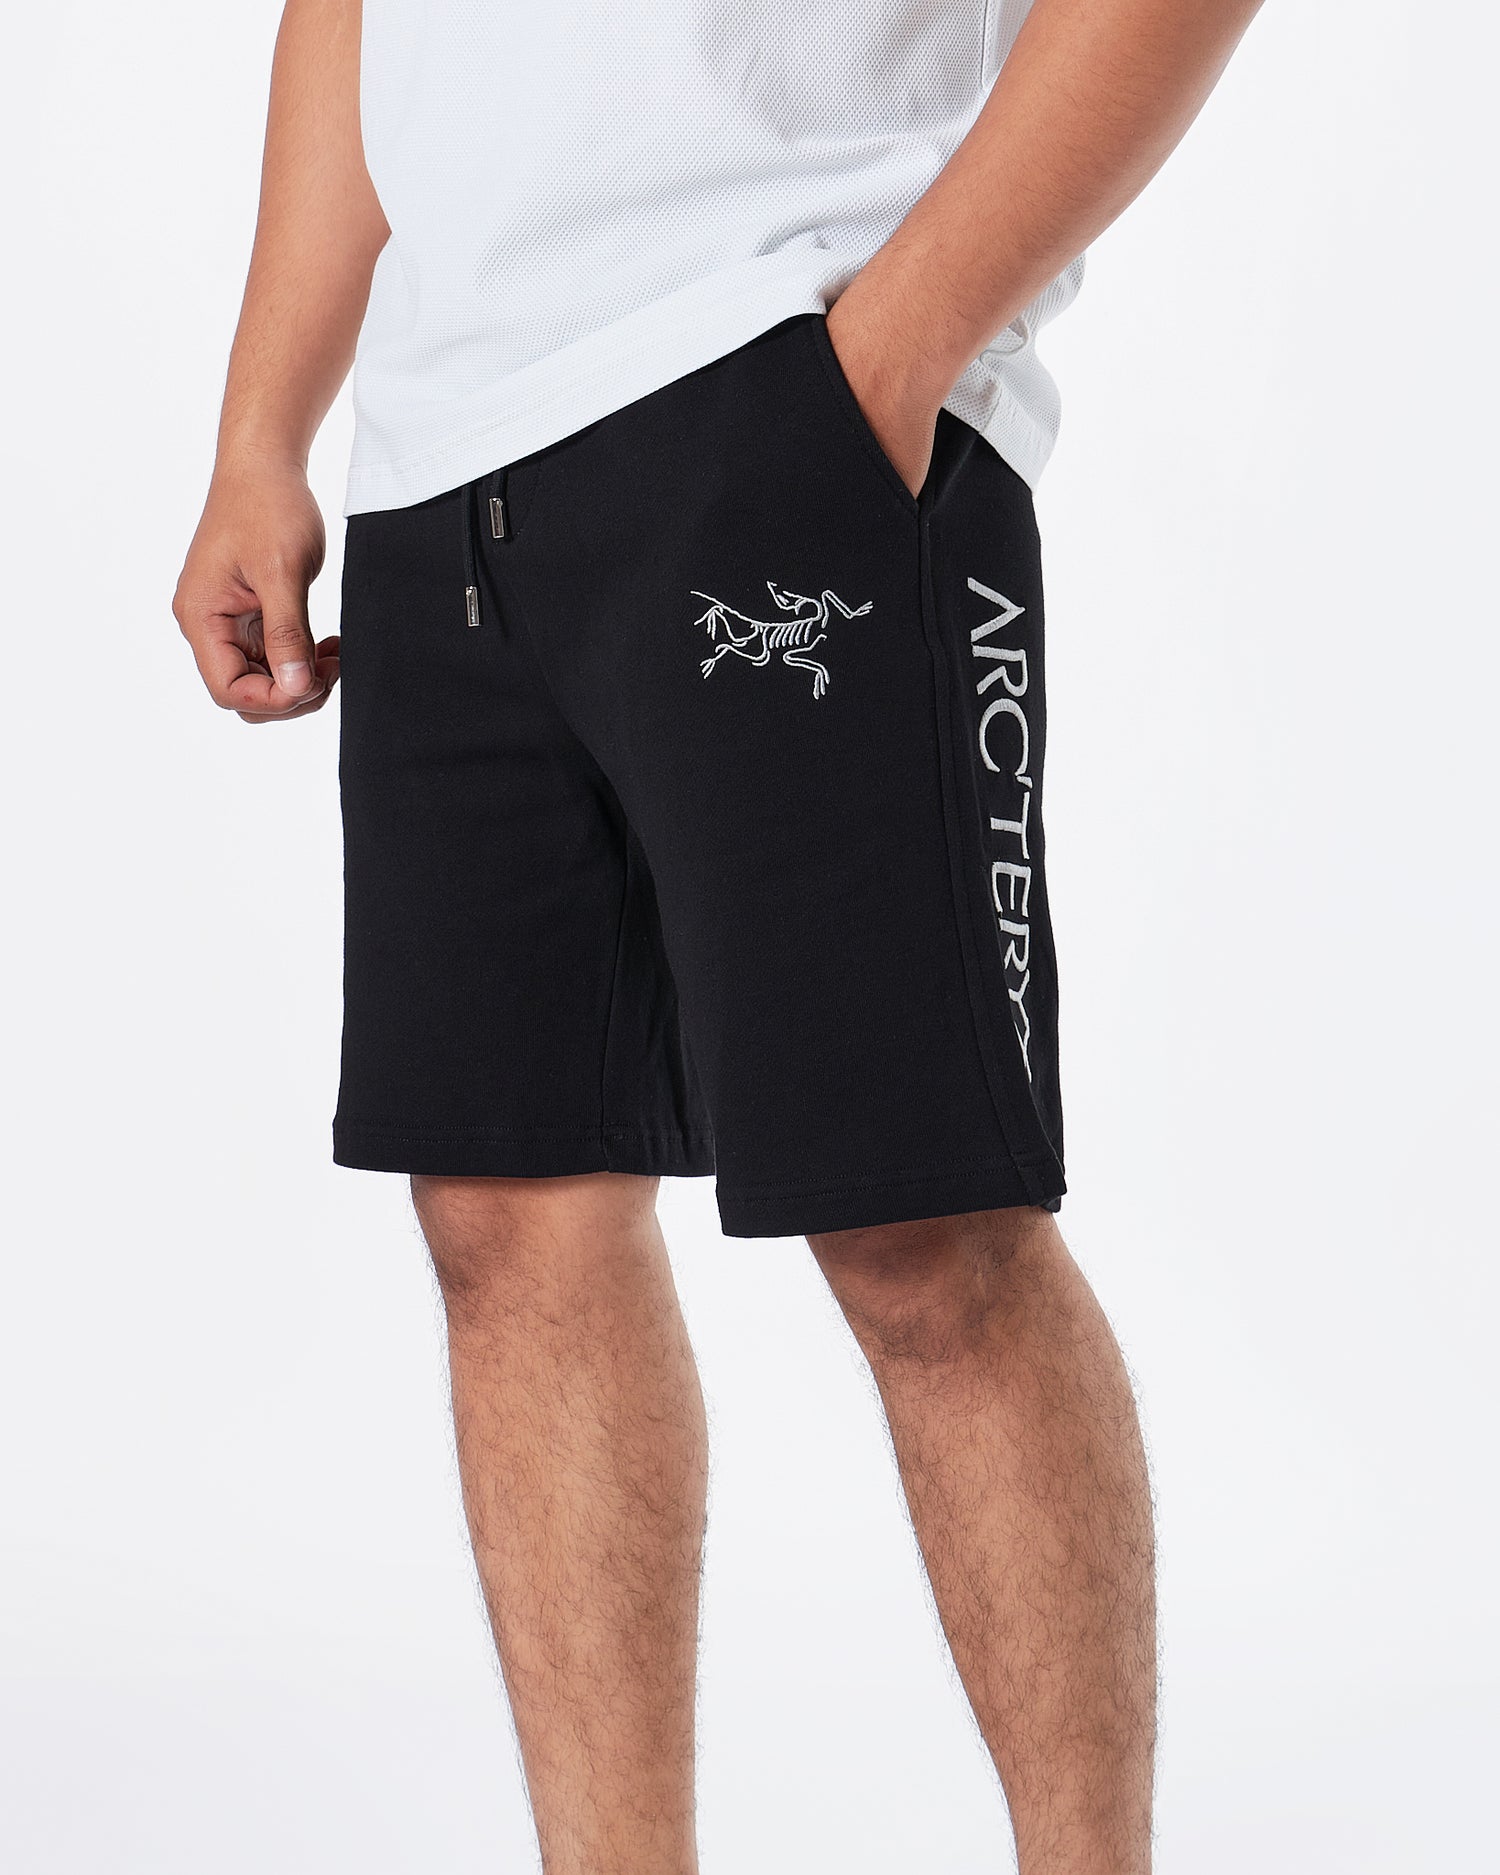 ARC Logo Embroidered Men Black Shorts 24.90